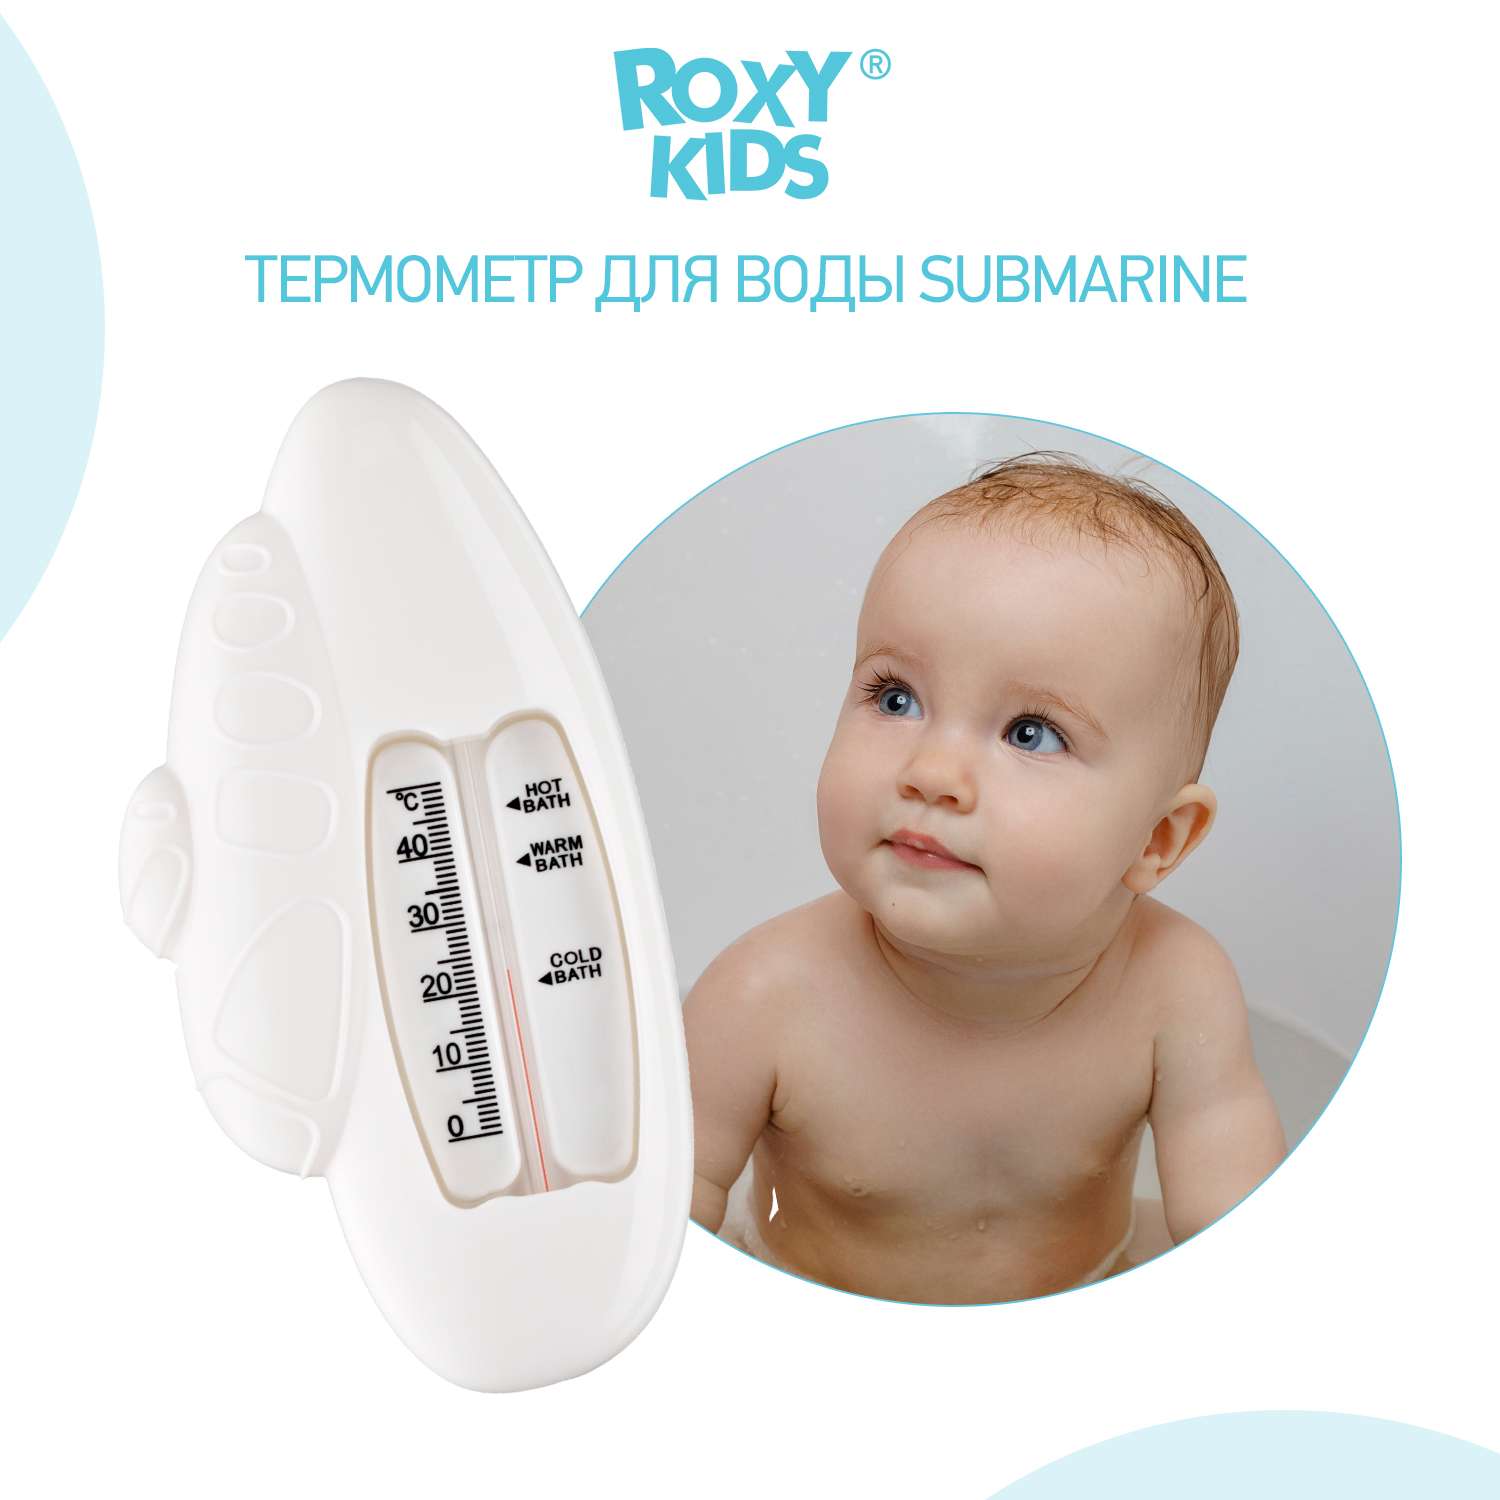 Термометр детский для воды ROXY-KIDS Submarine для купания белый - фото 1